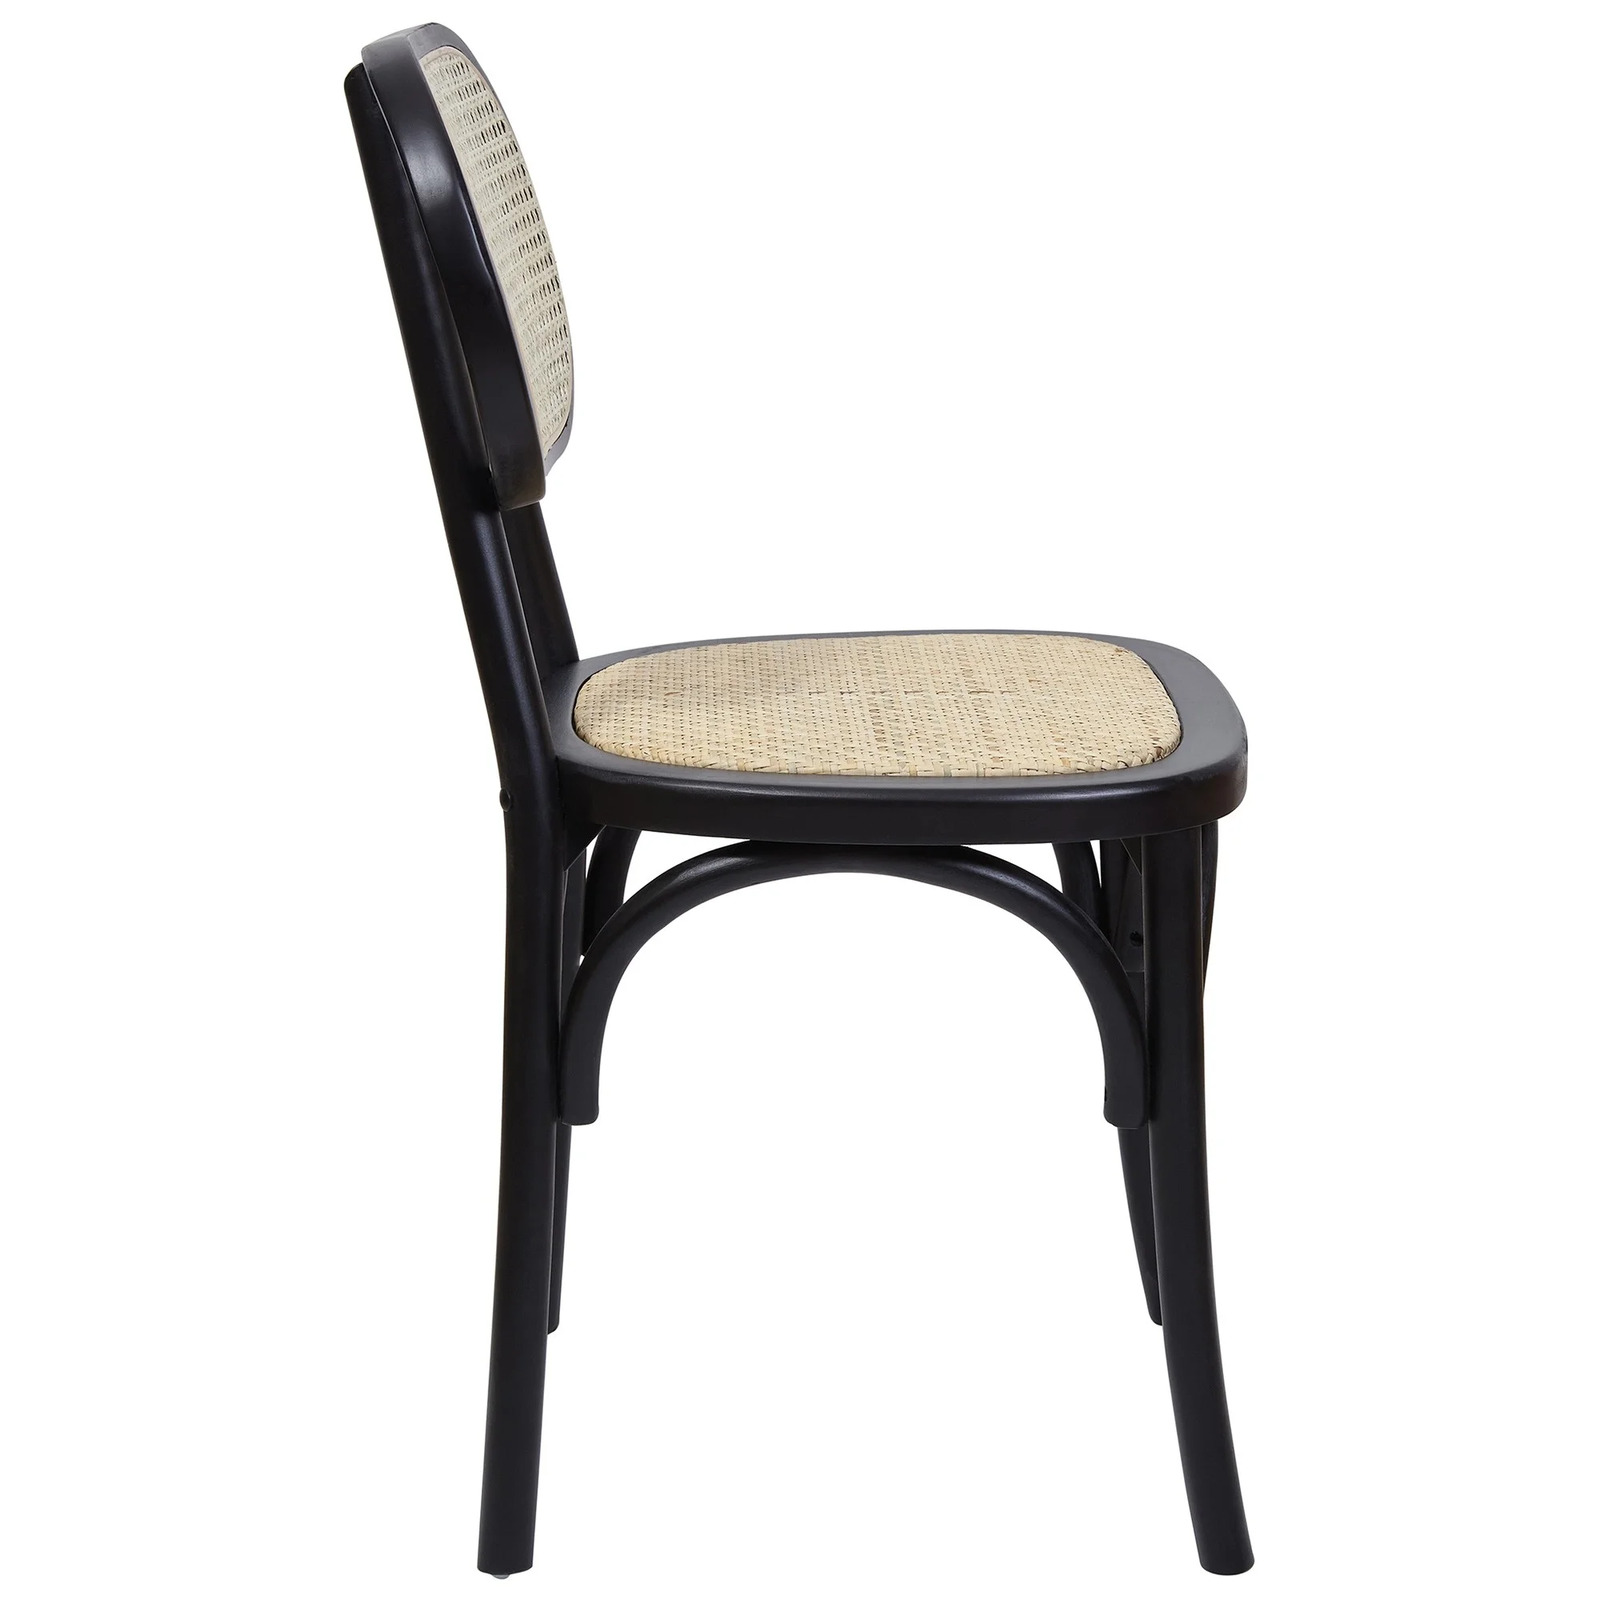 Bonilla Beech Timber & Rattan Dining Chairs, Black Set of 2